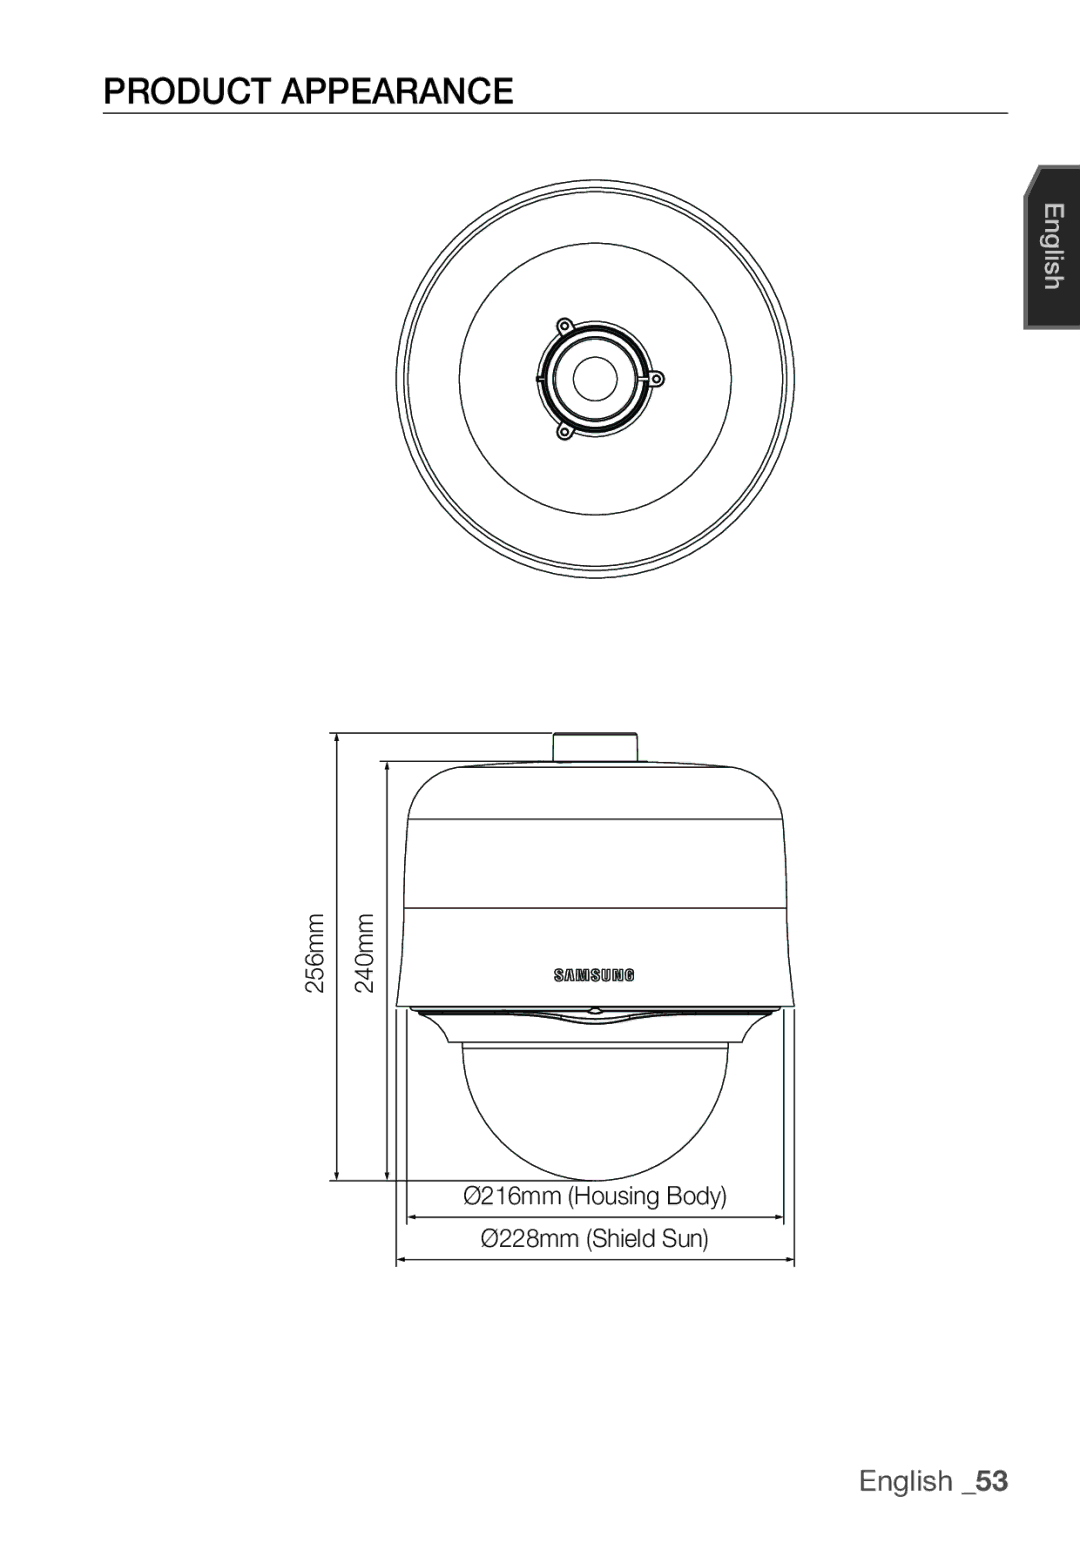 Samsung SCC-C7455P manual Product Appearance, Ø216mm Housing Body Ø228mm Shield Sun 